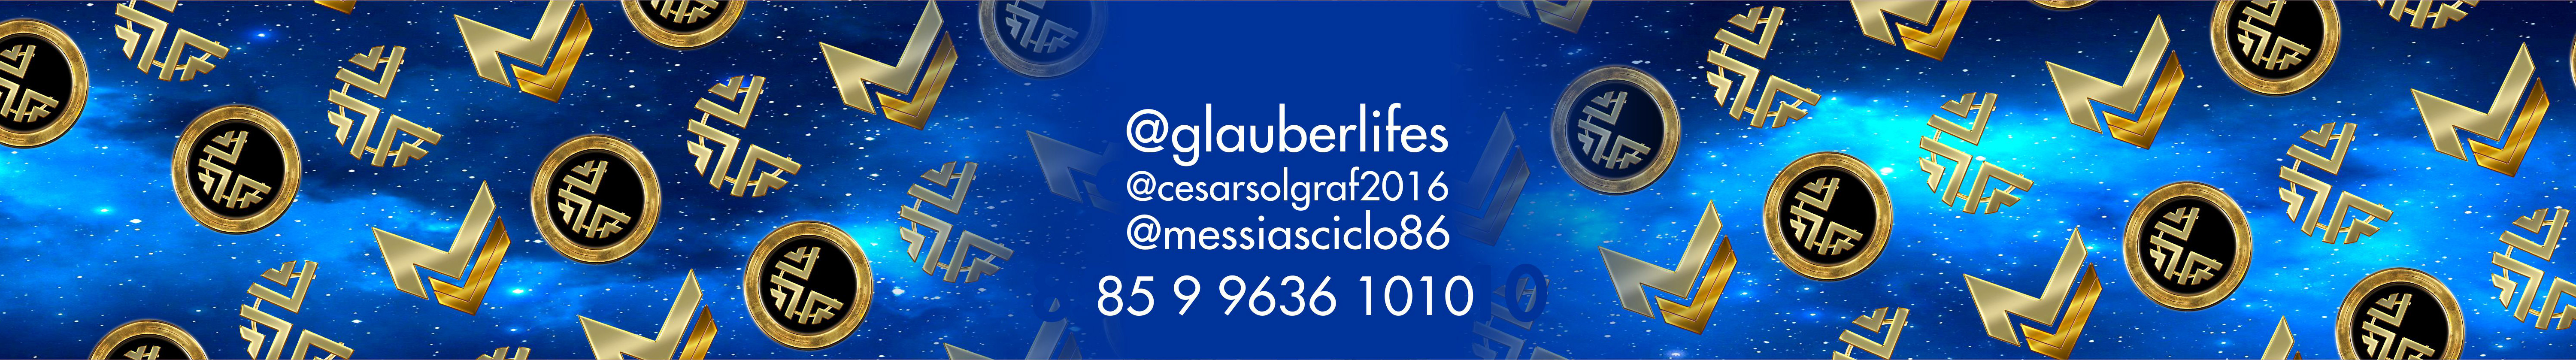 CESAR SOUZA's profile banner